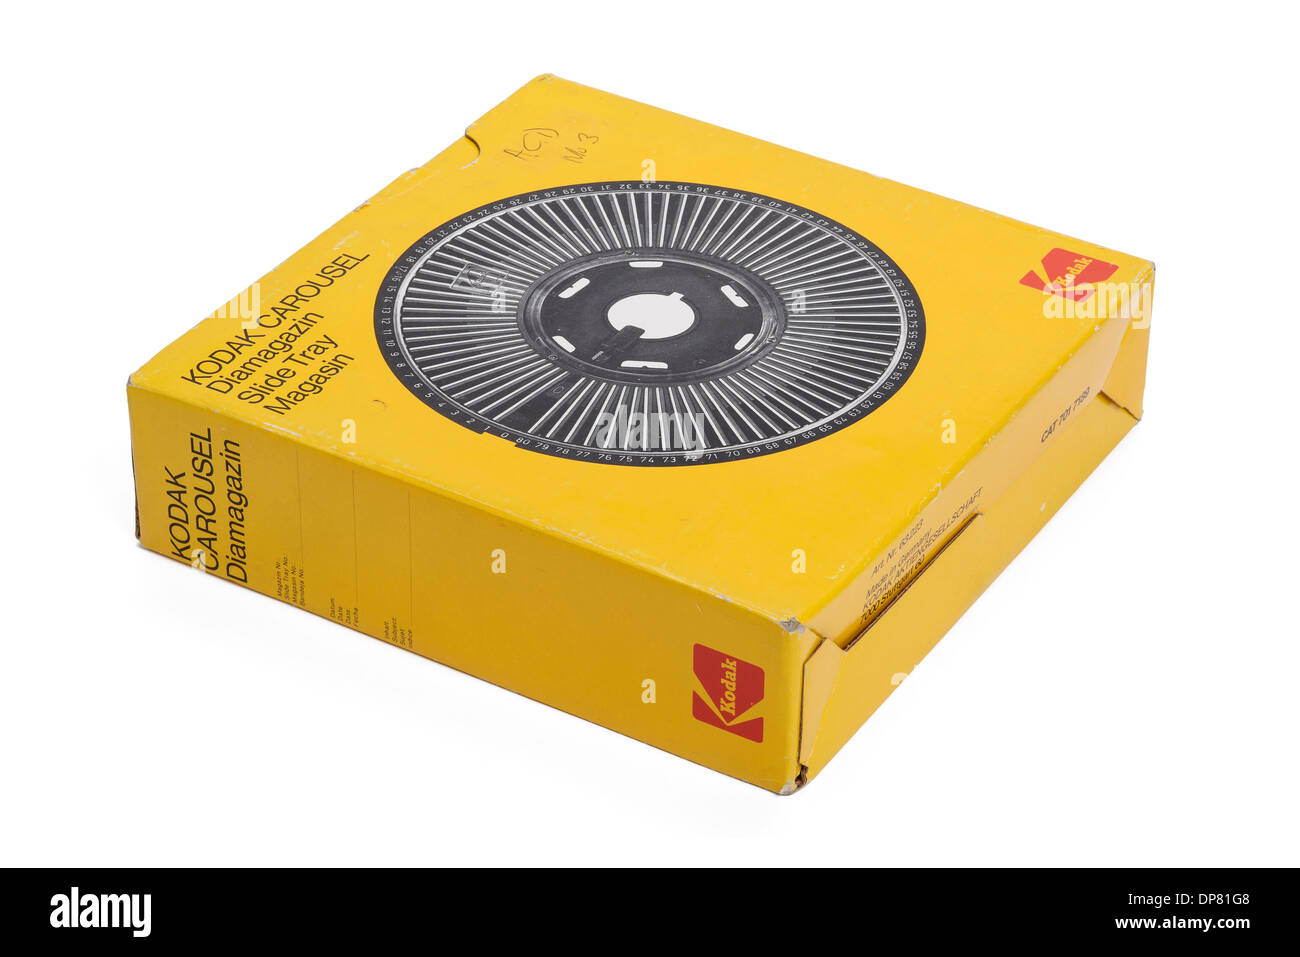 Carrusel de diapositivas Kodak circular caja bandeja para proyector de diapositivas Foto de stock